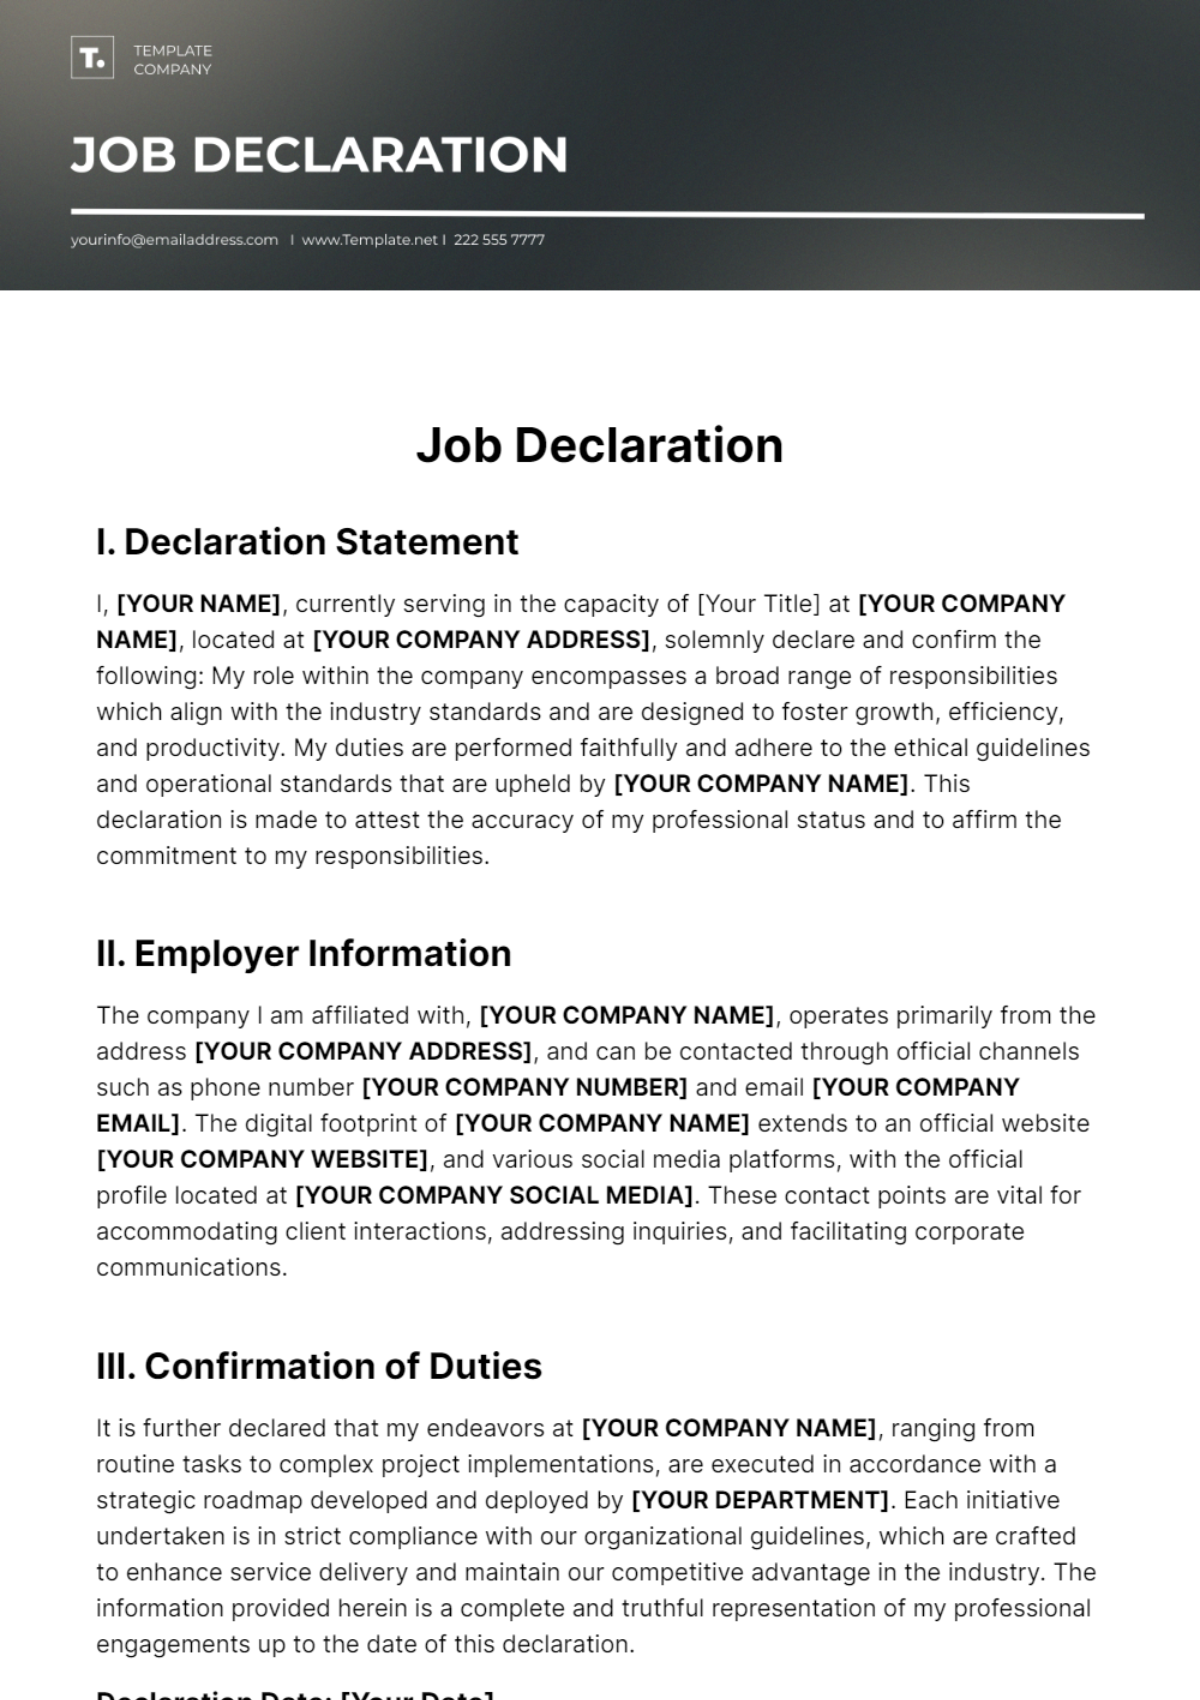 Job Declaration Template